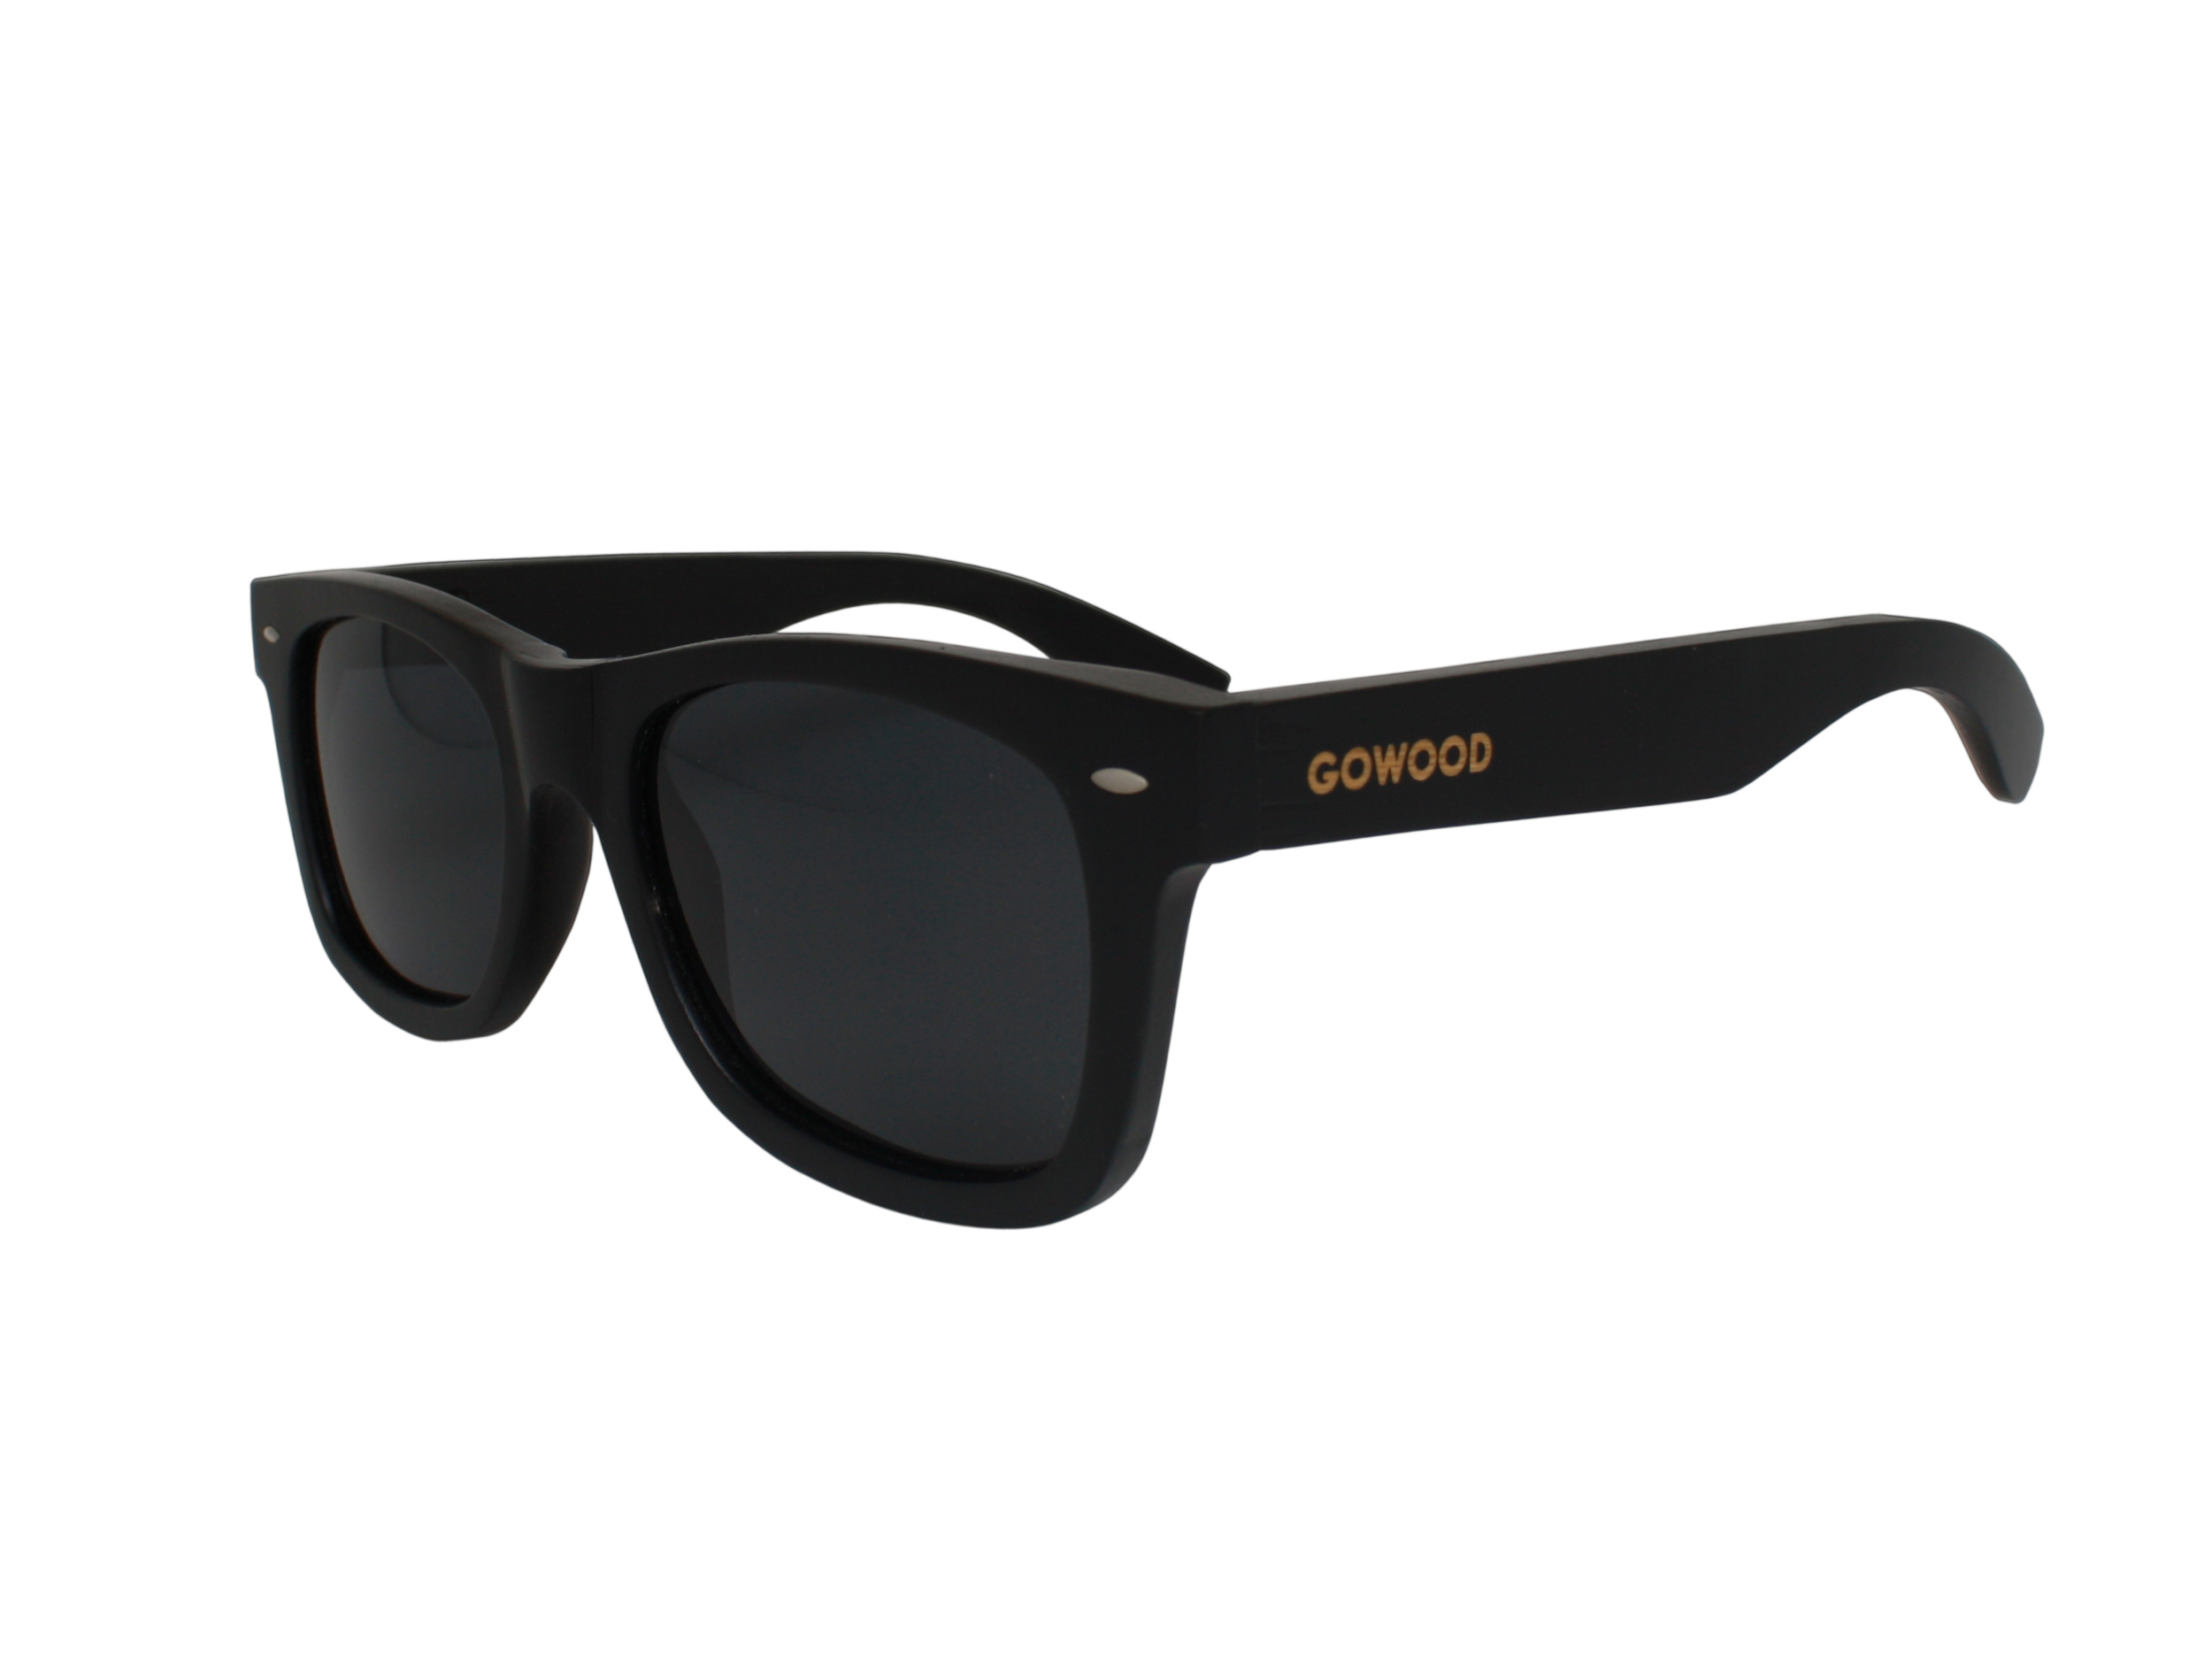 wayfarer style sunglasses black front side